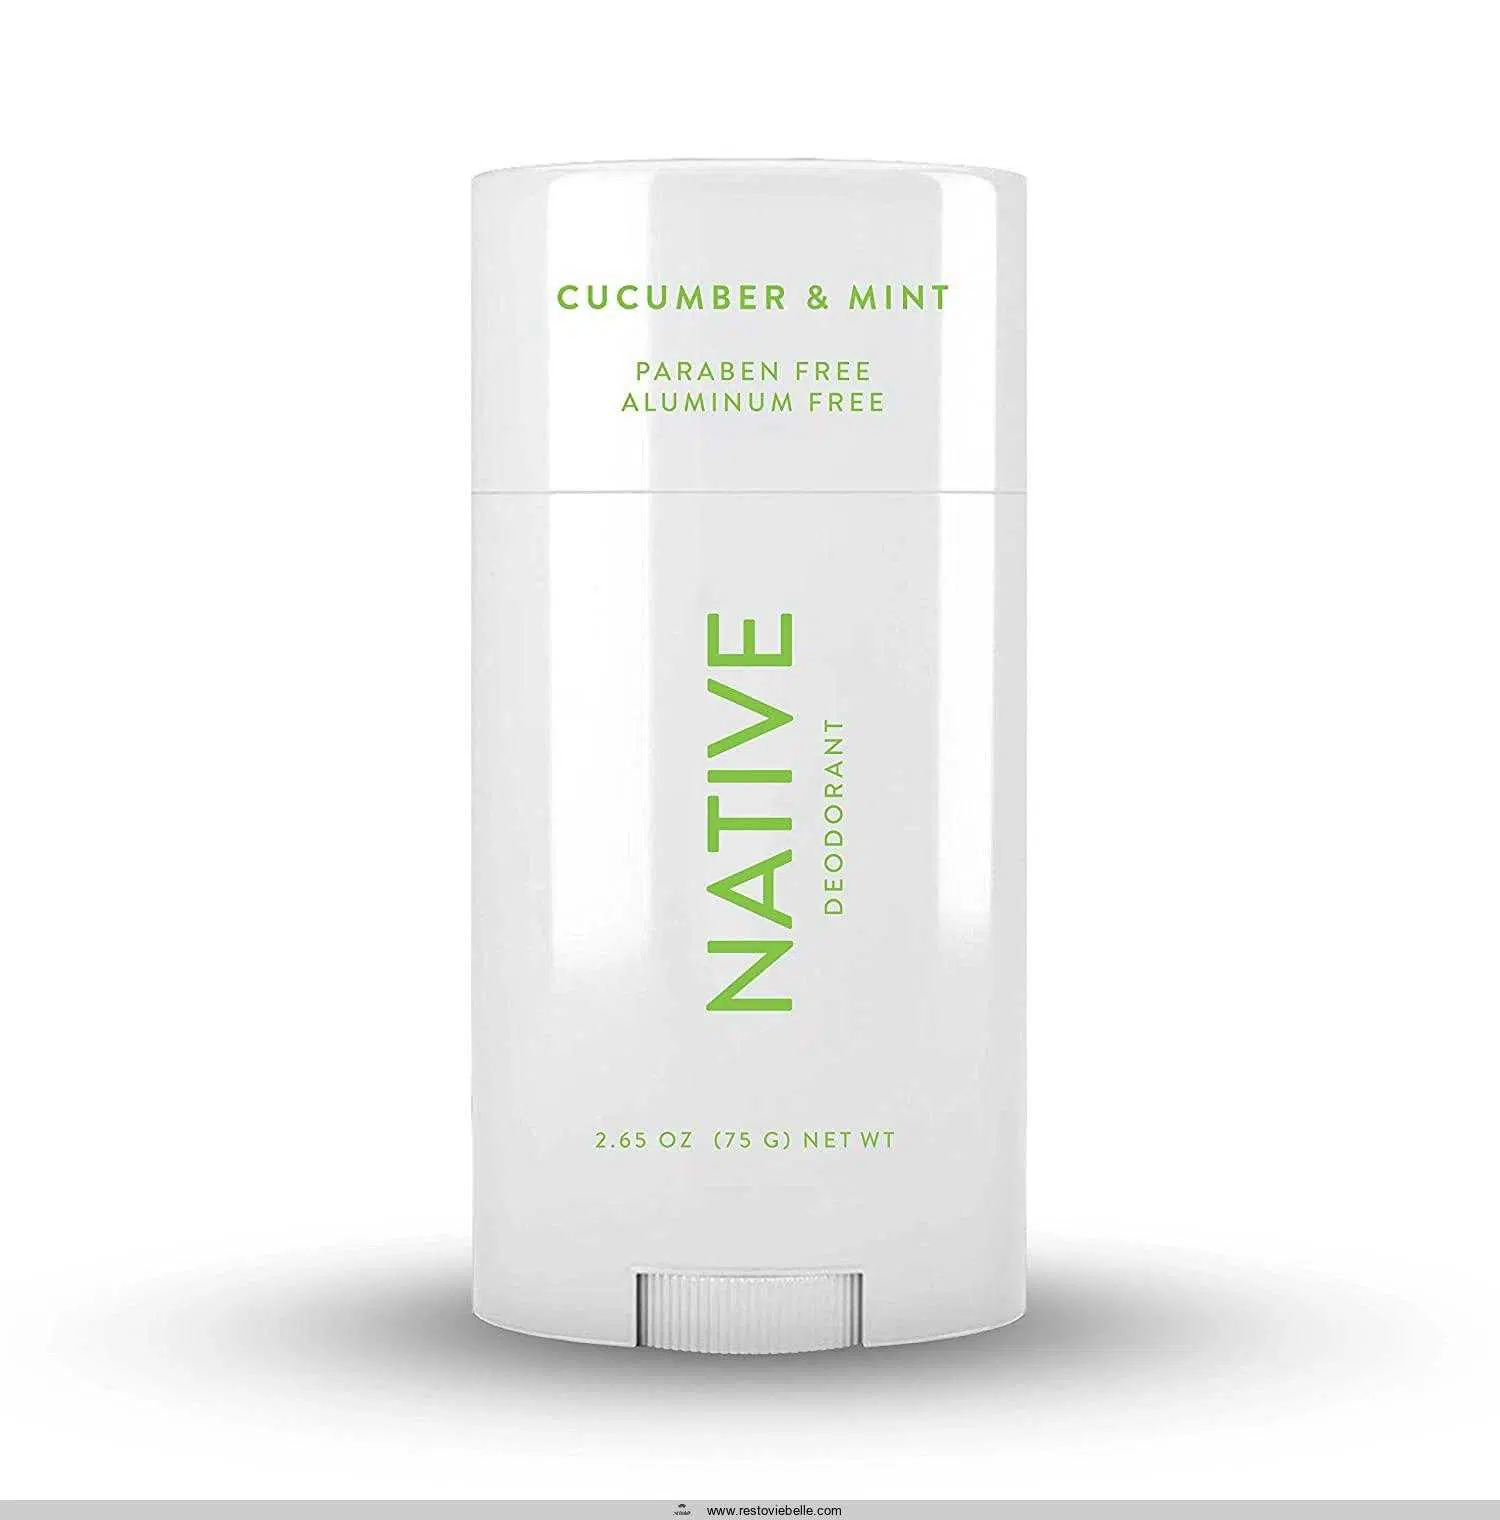 Native Natural Deodorant for Men and Women